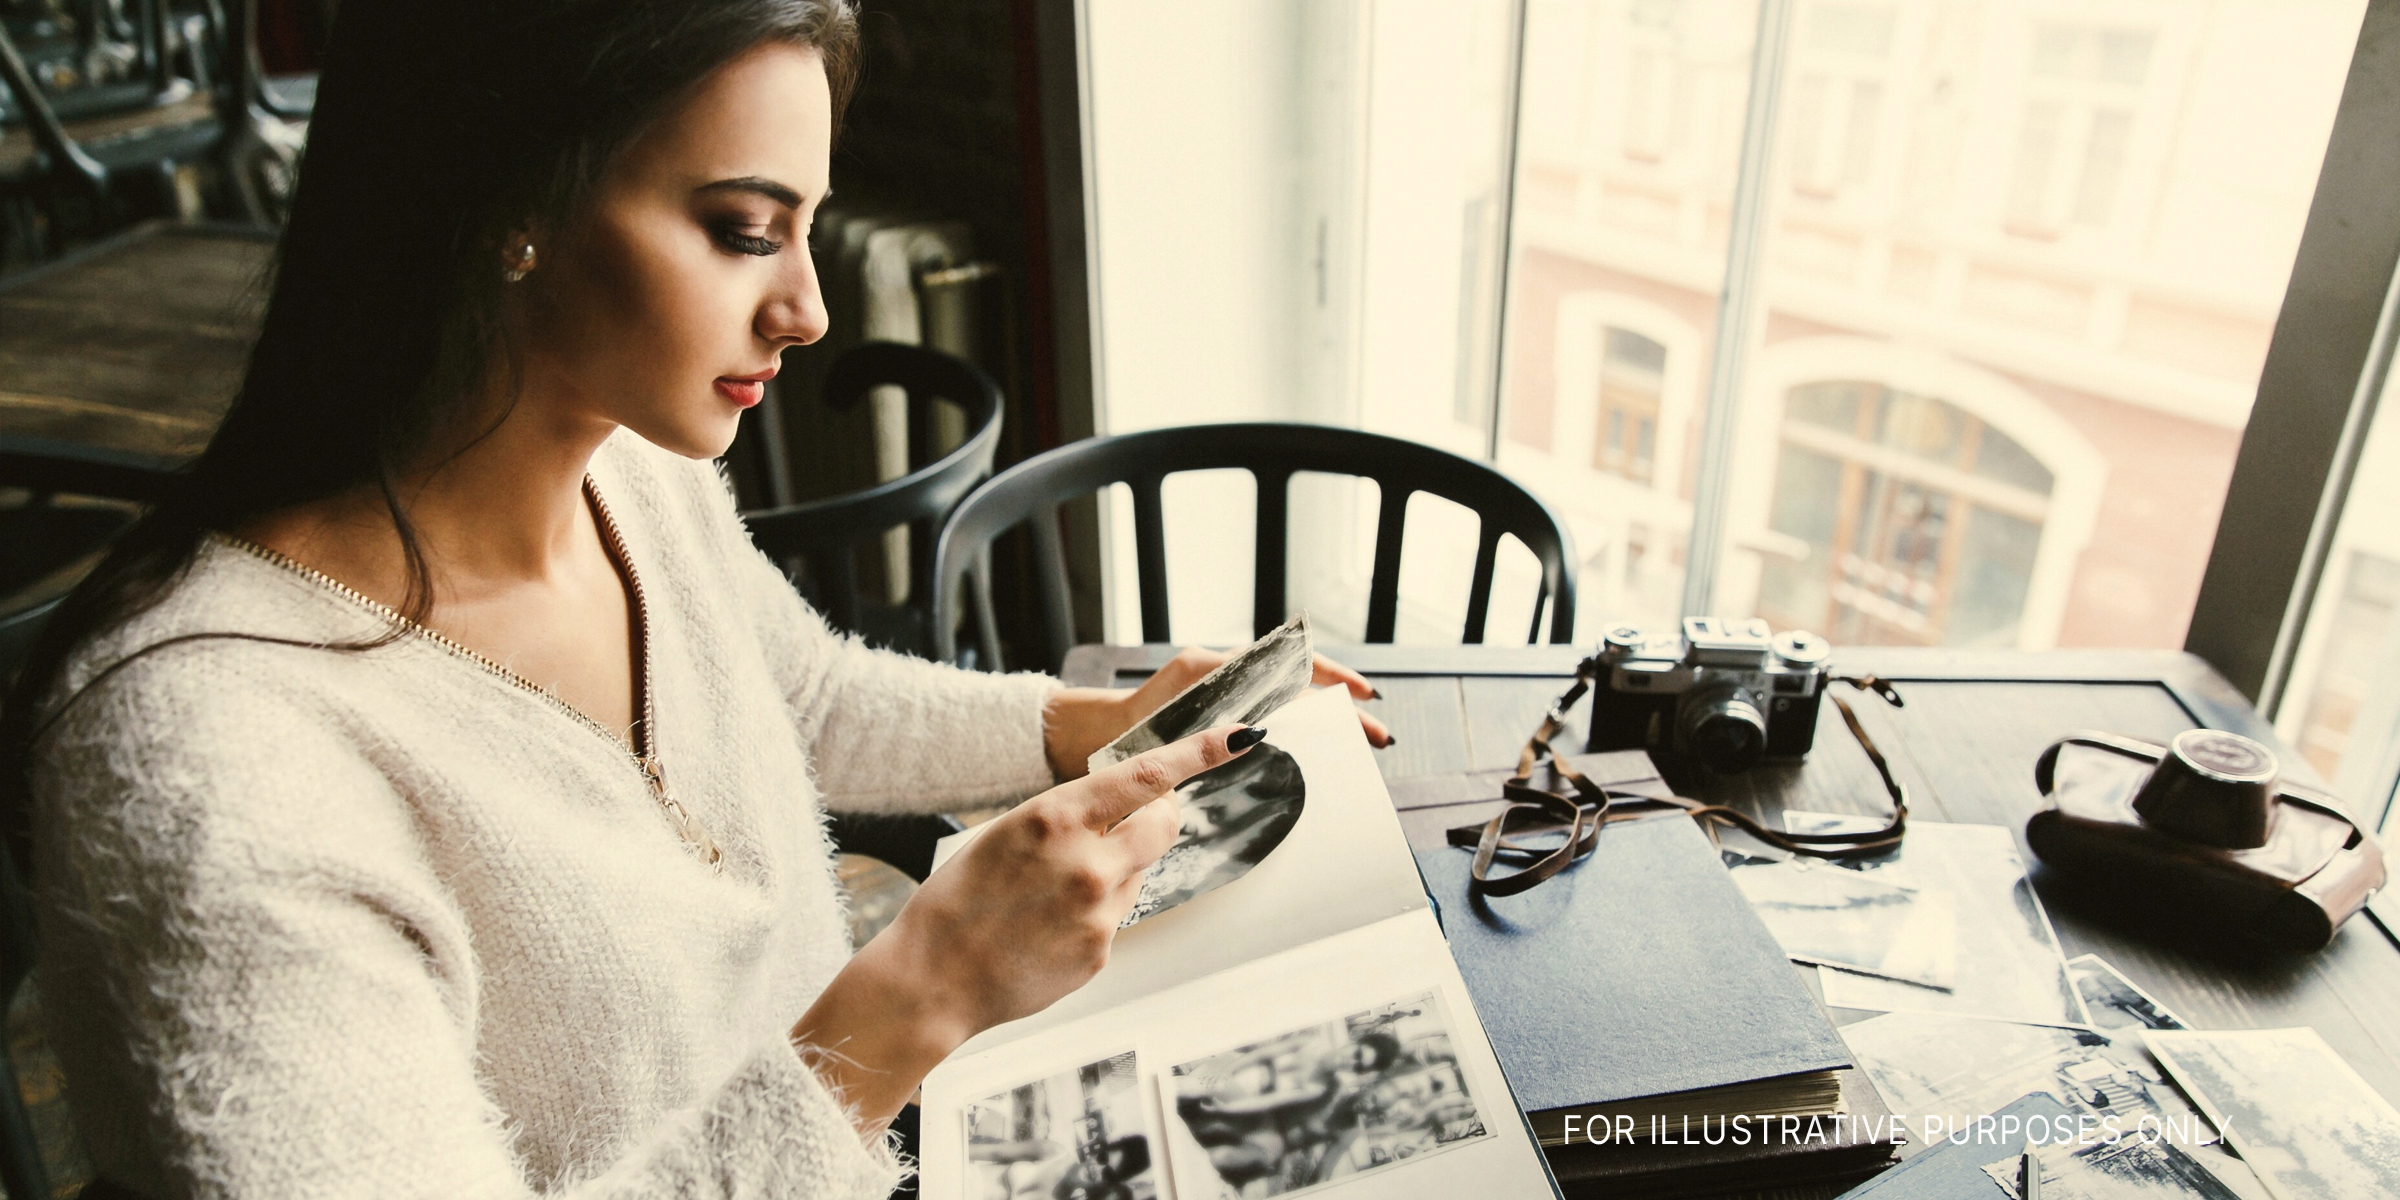 Une femme regardant un album photos | Source : Shutterstock